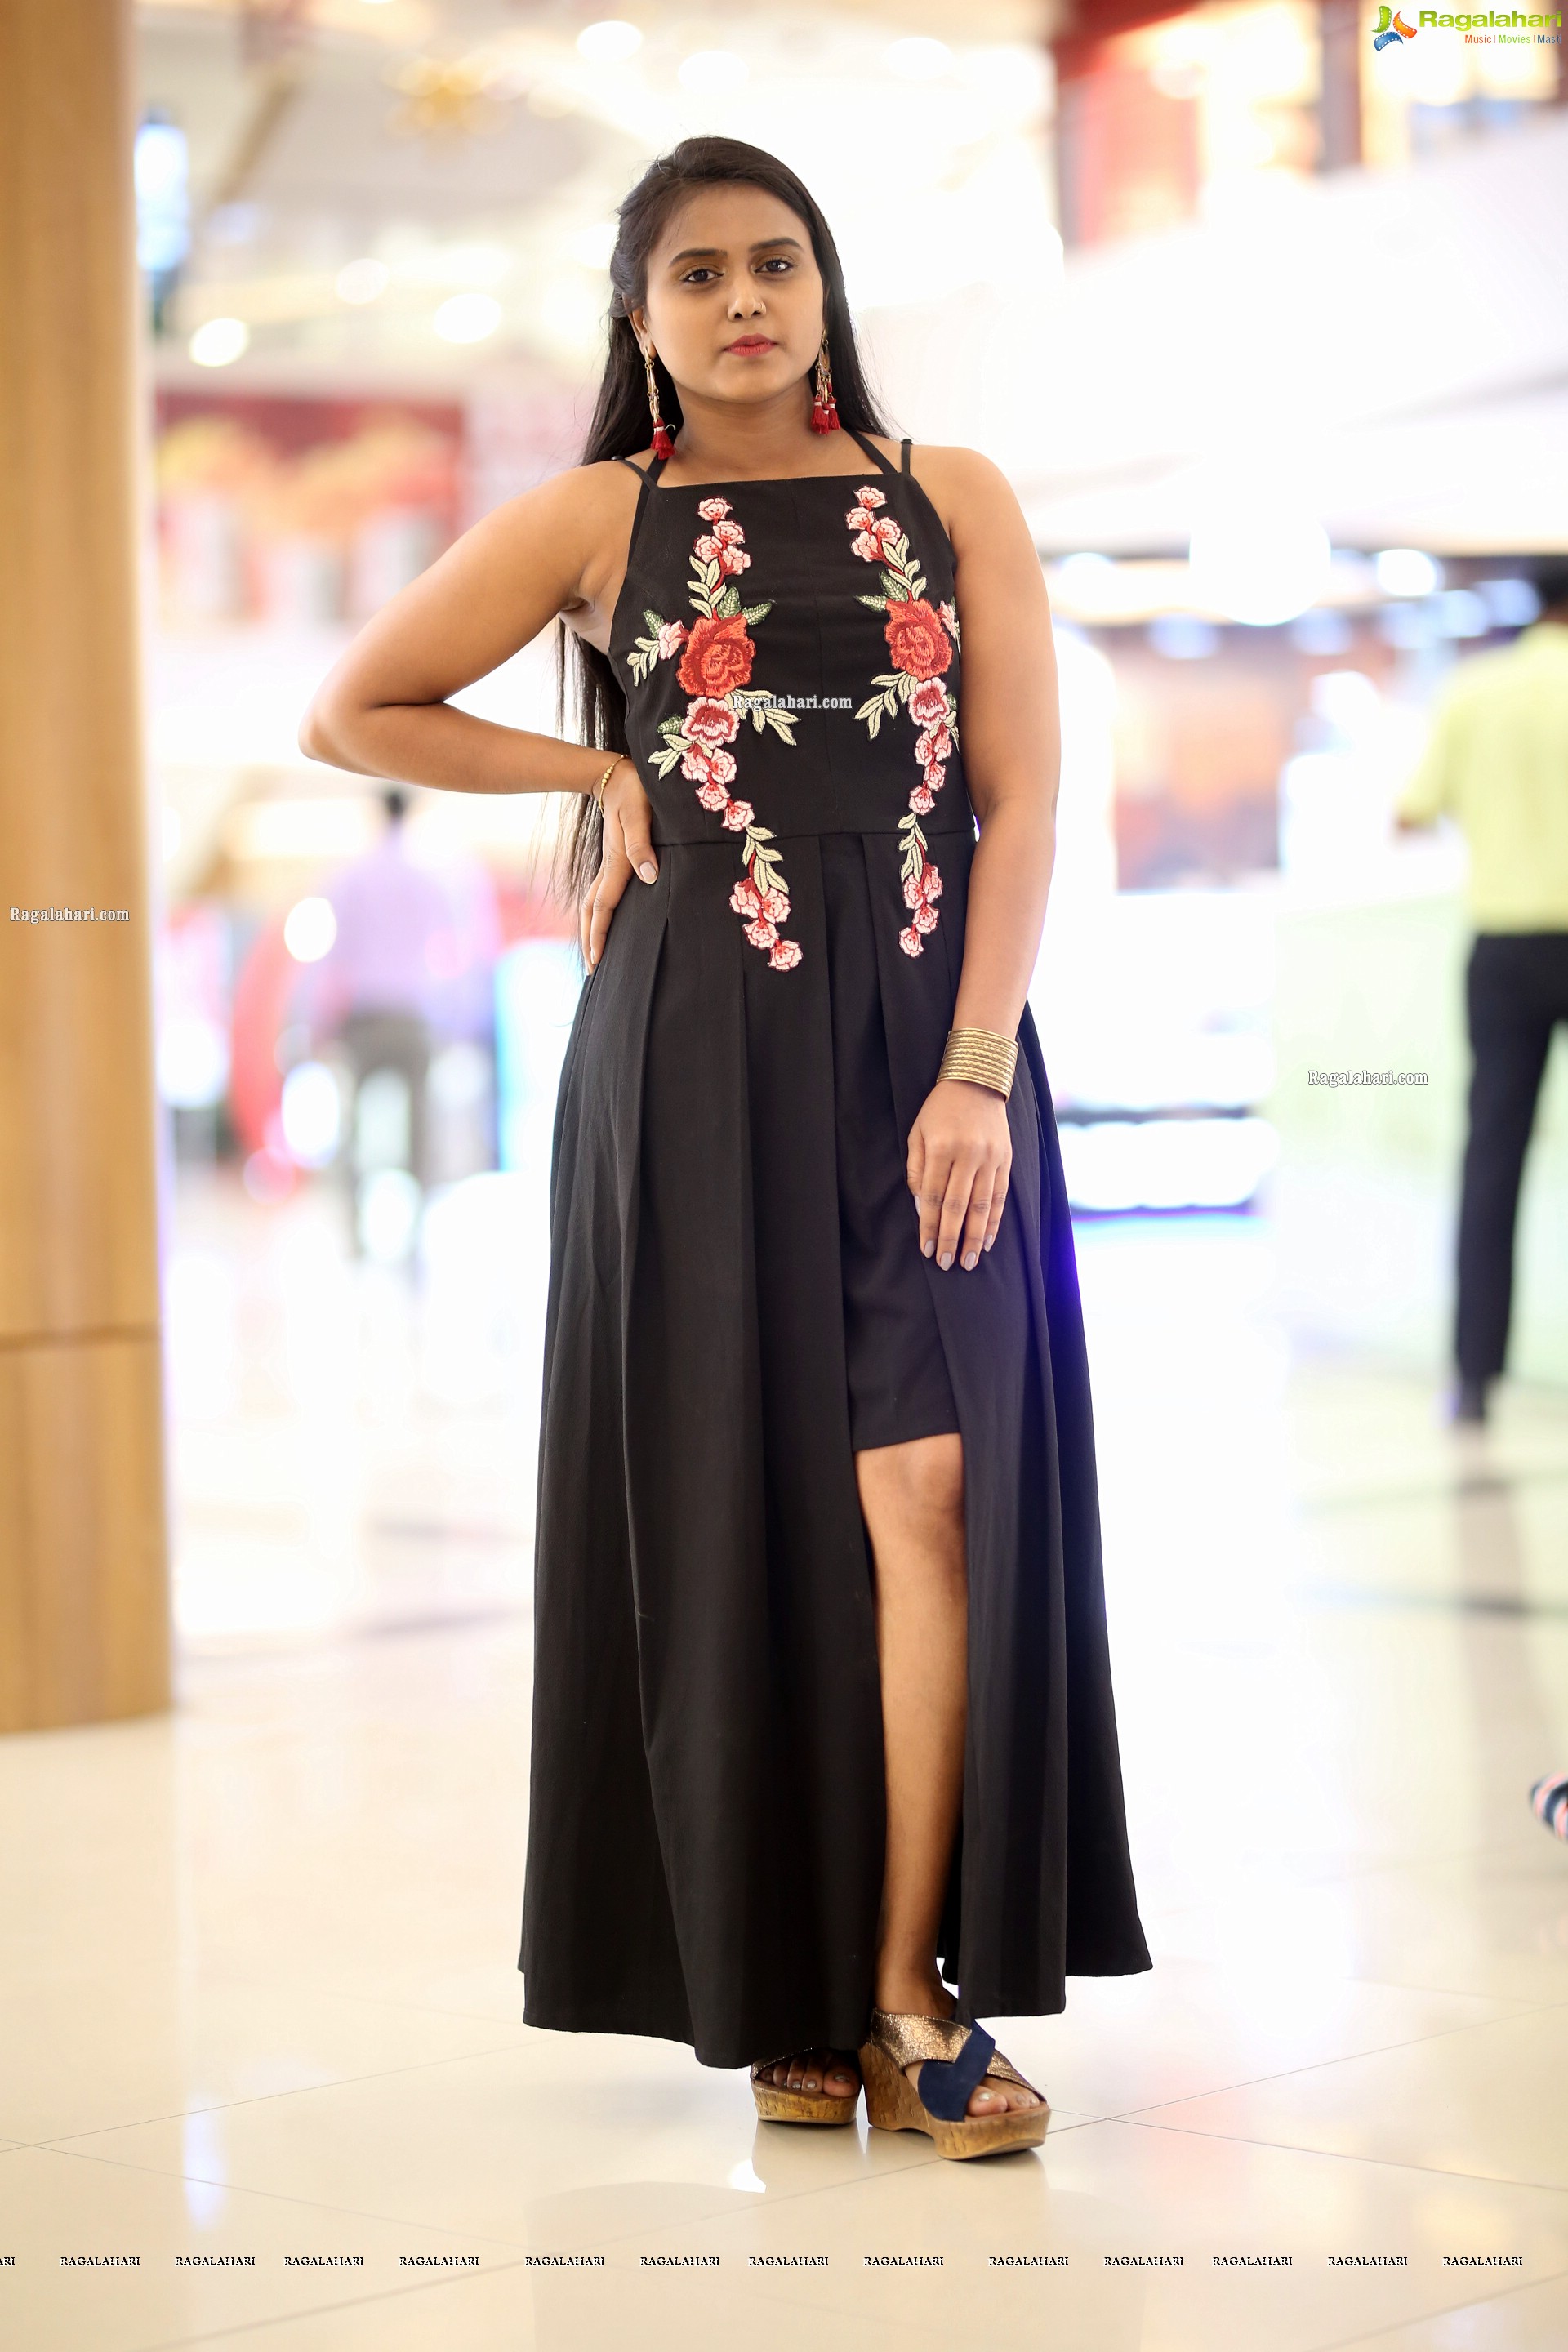 Anchor Priyanka in Black Thigh-High Slit Dress, HD Gallery